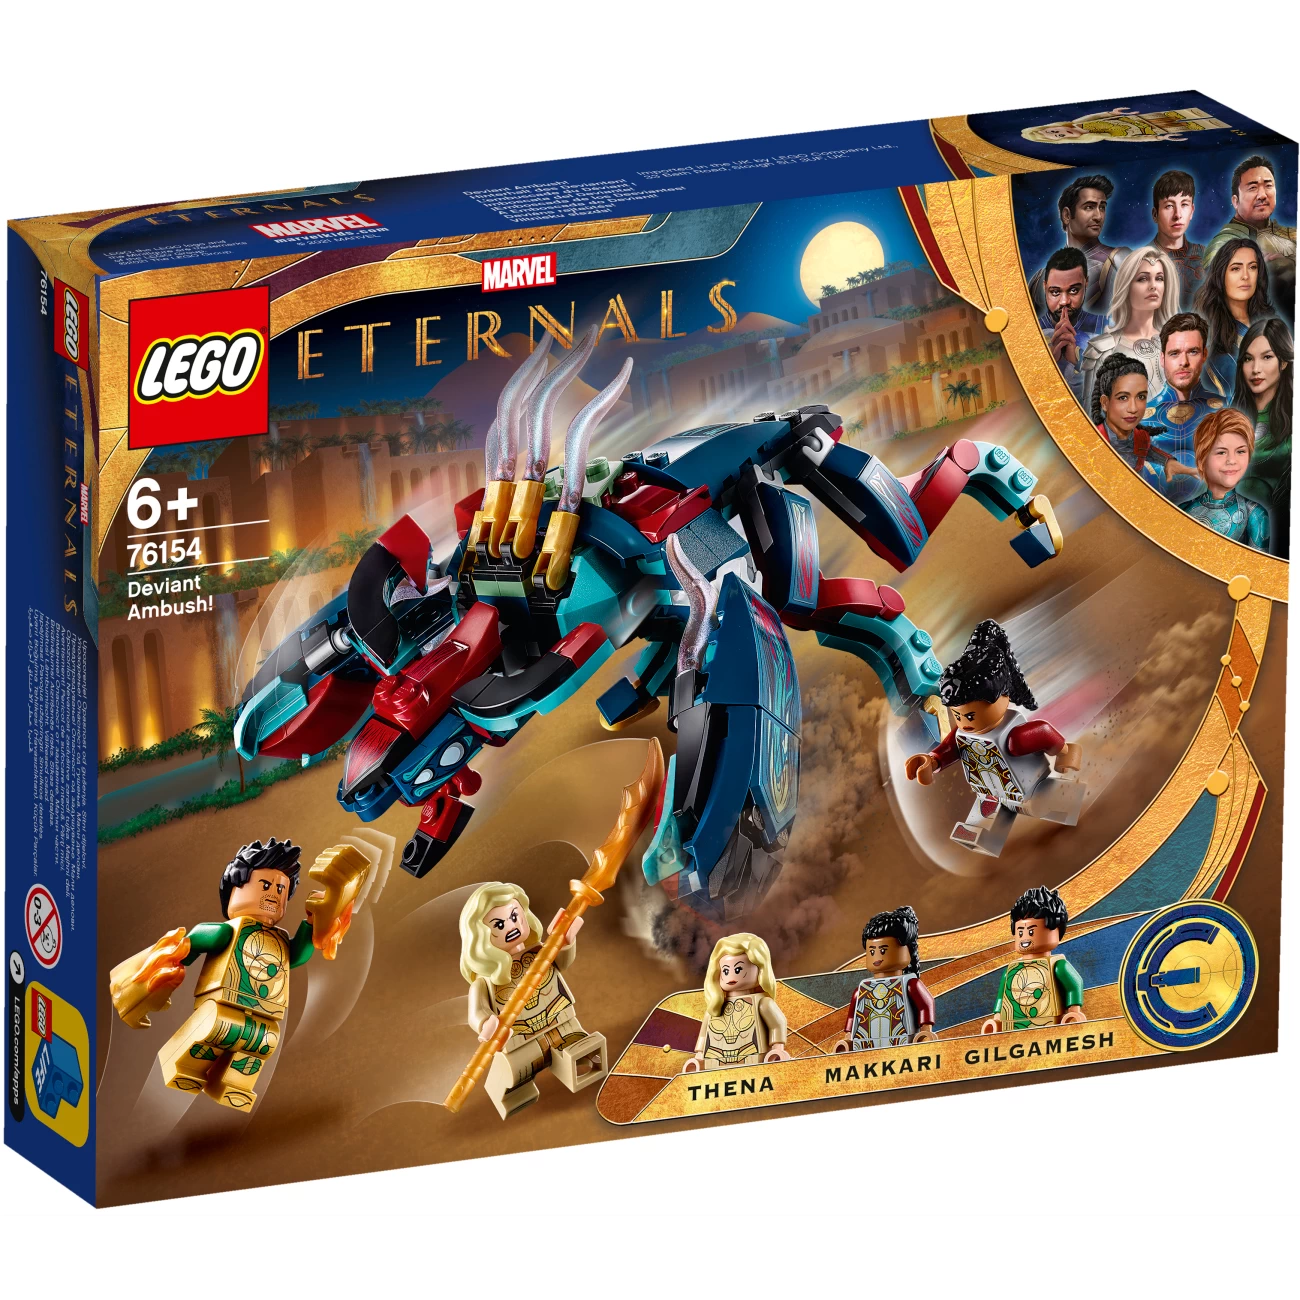 LEGO Marvel Eternals 76154 - Hinterhalt des Deviants